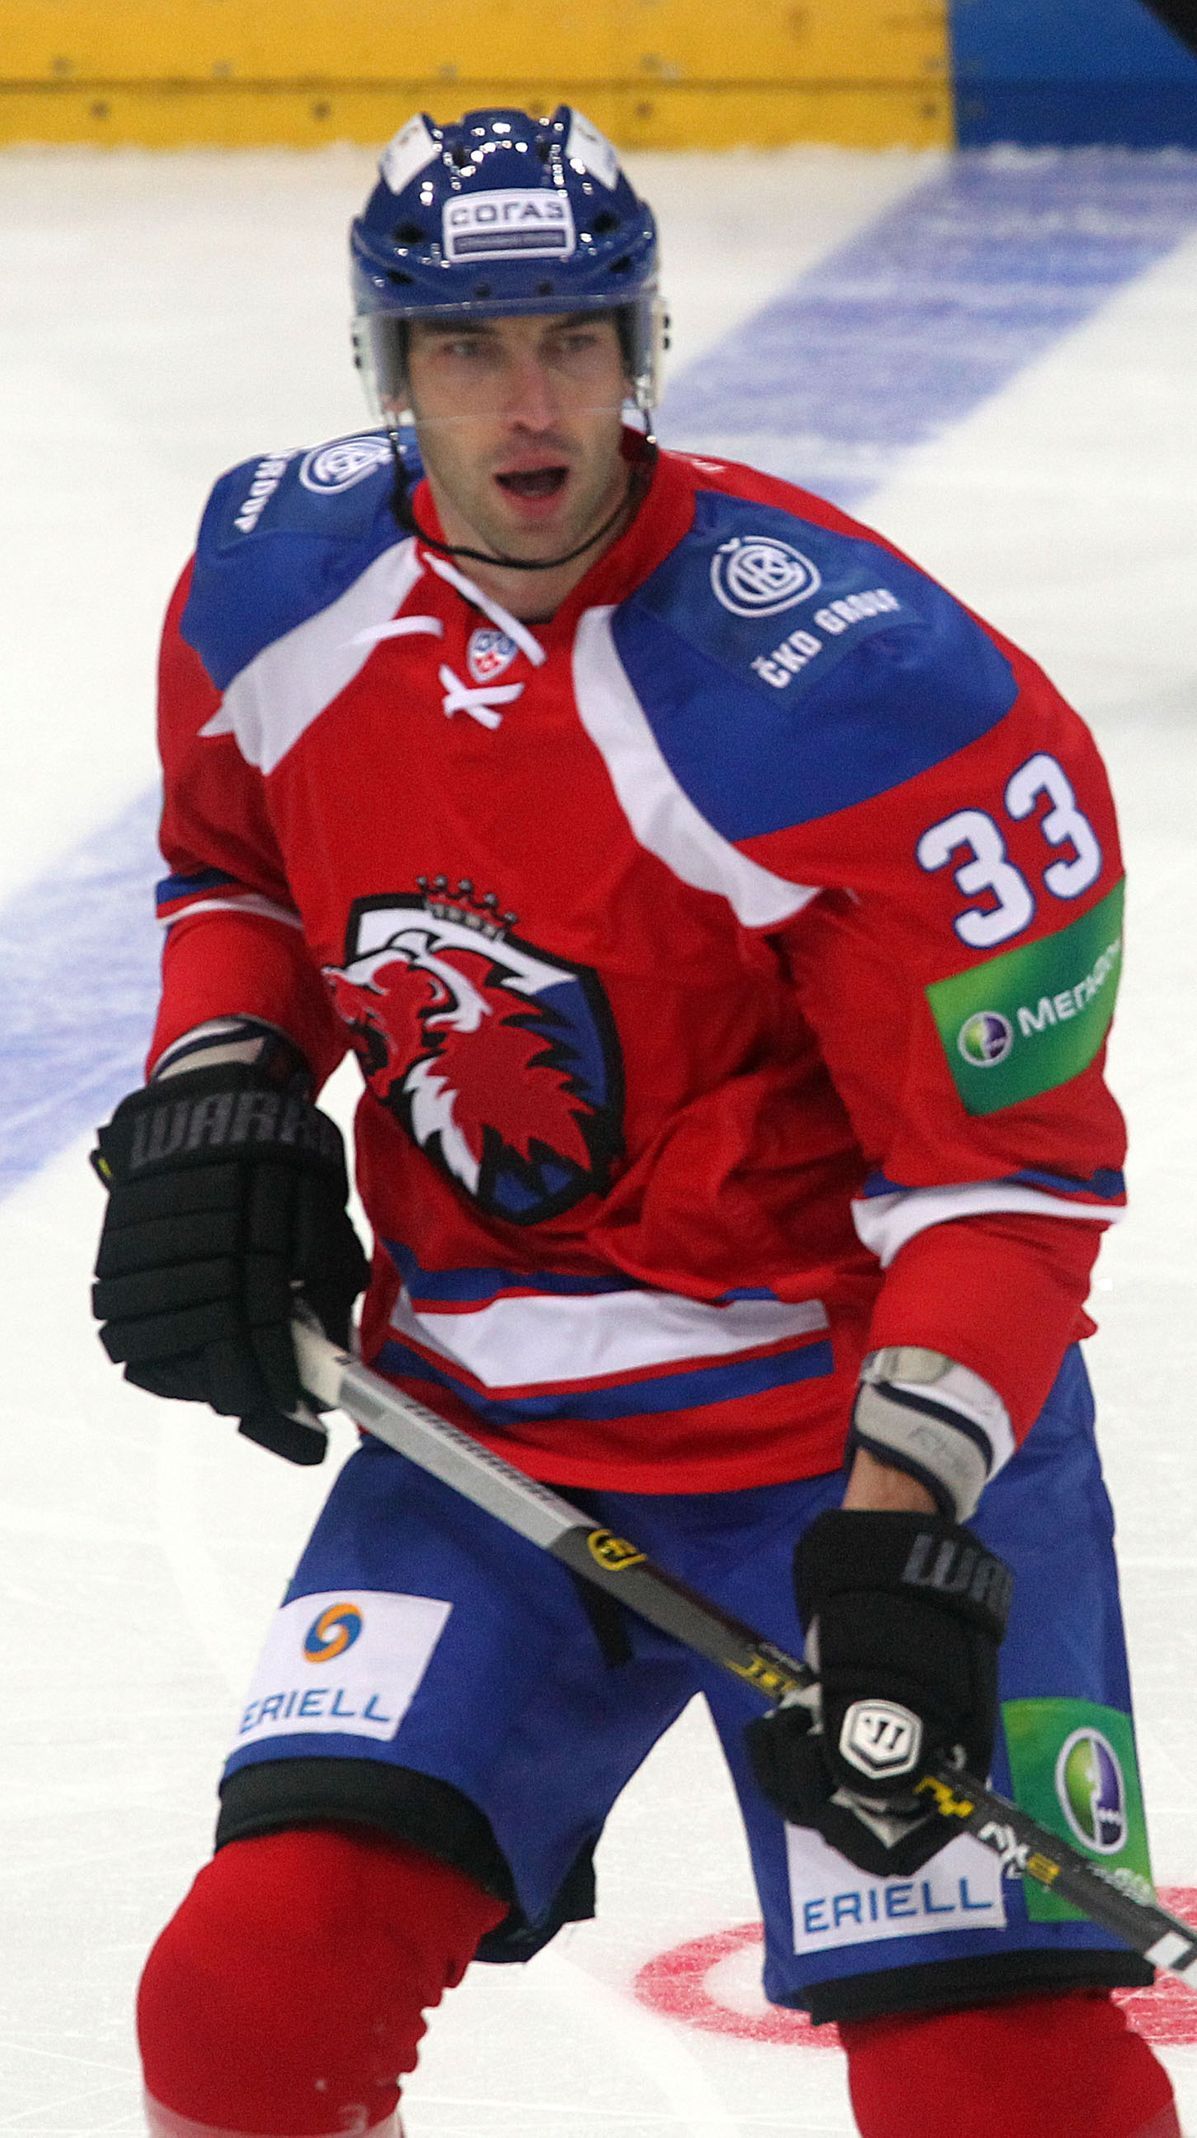 Hokejista Lva Praha Zdeno Chára v utkání KHL proti SKA Petrohradu.